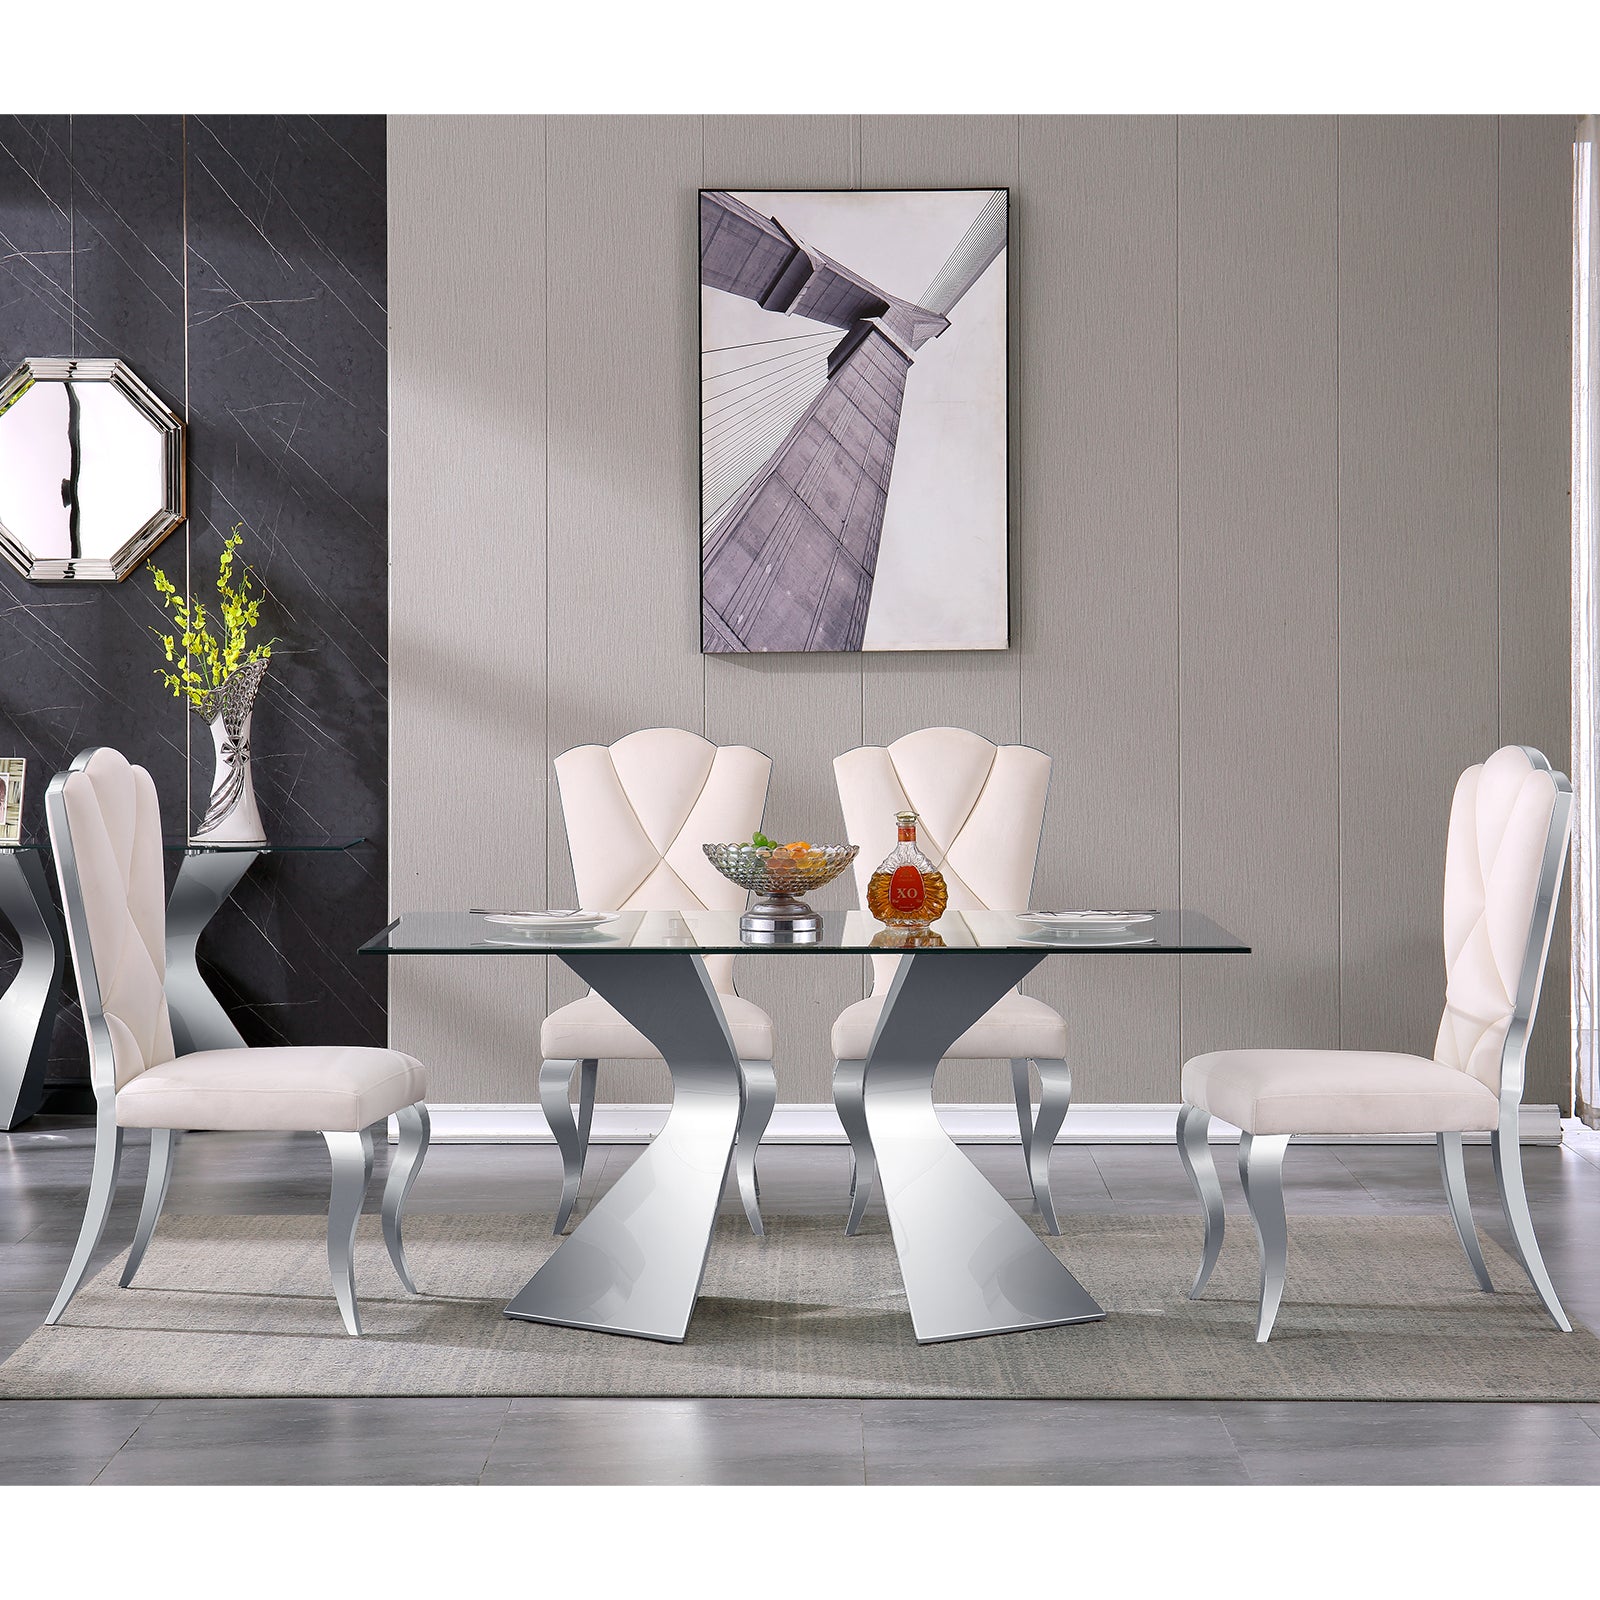 White velvet dining chairs | Cloud backrest design | Silver Metal legs | C141